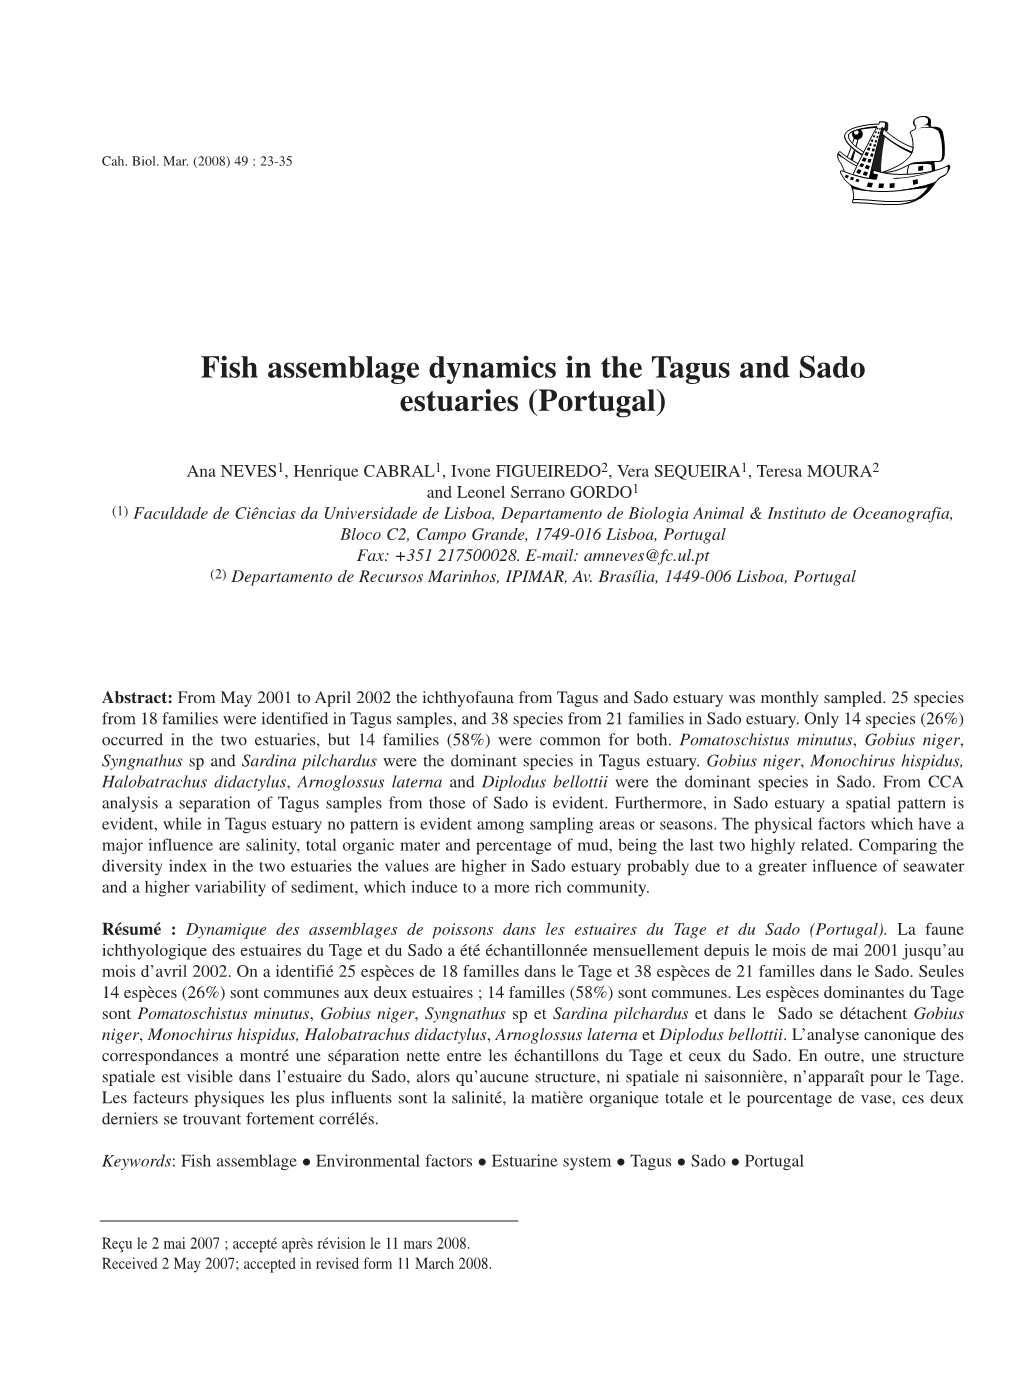 Fish Assemblage Dynamics in the Tagus and Sado Estuaries (Portugal)